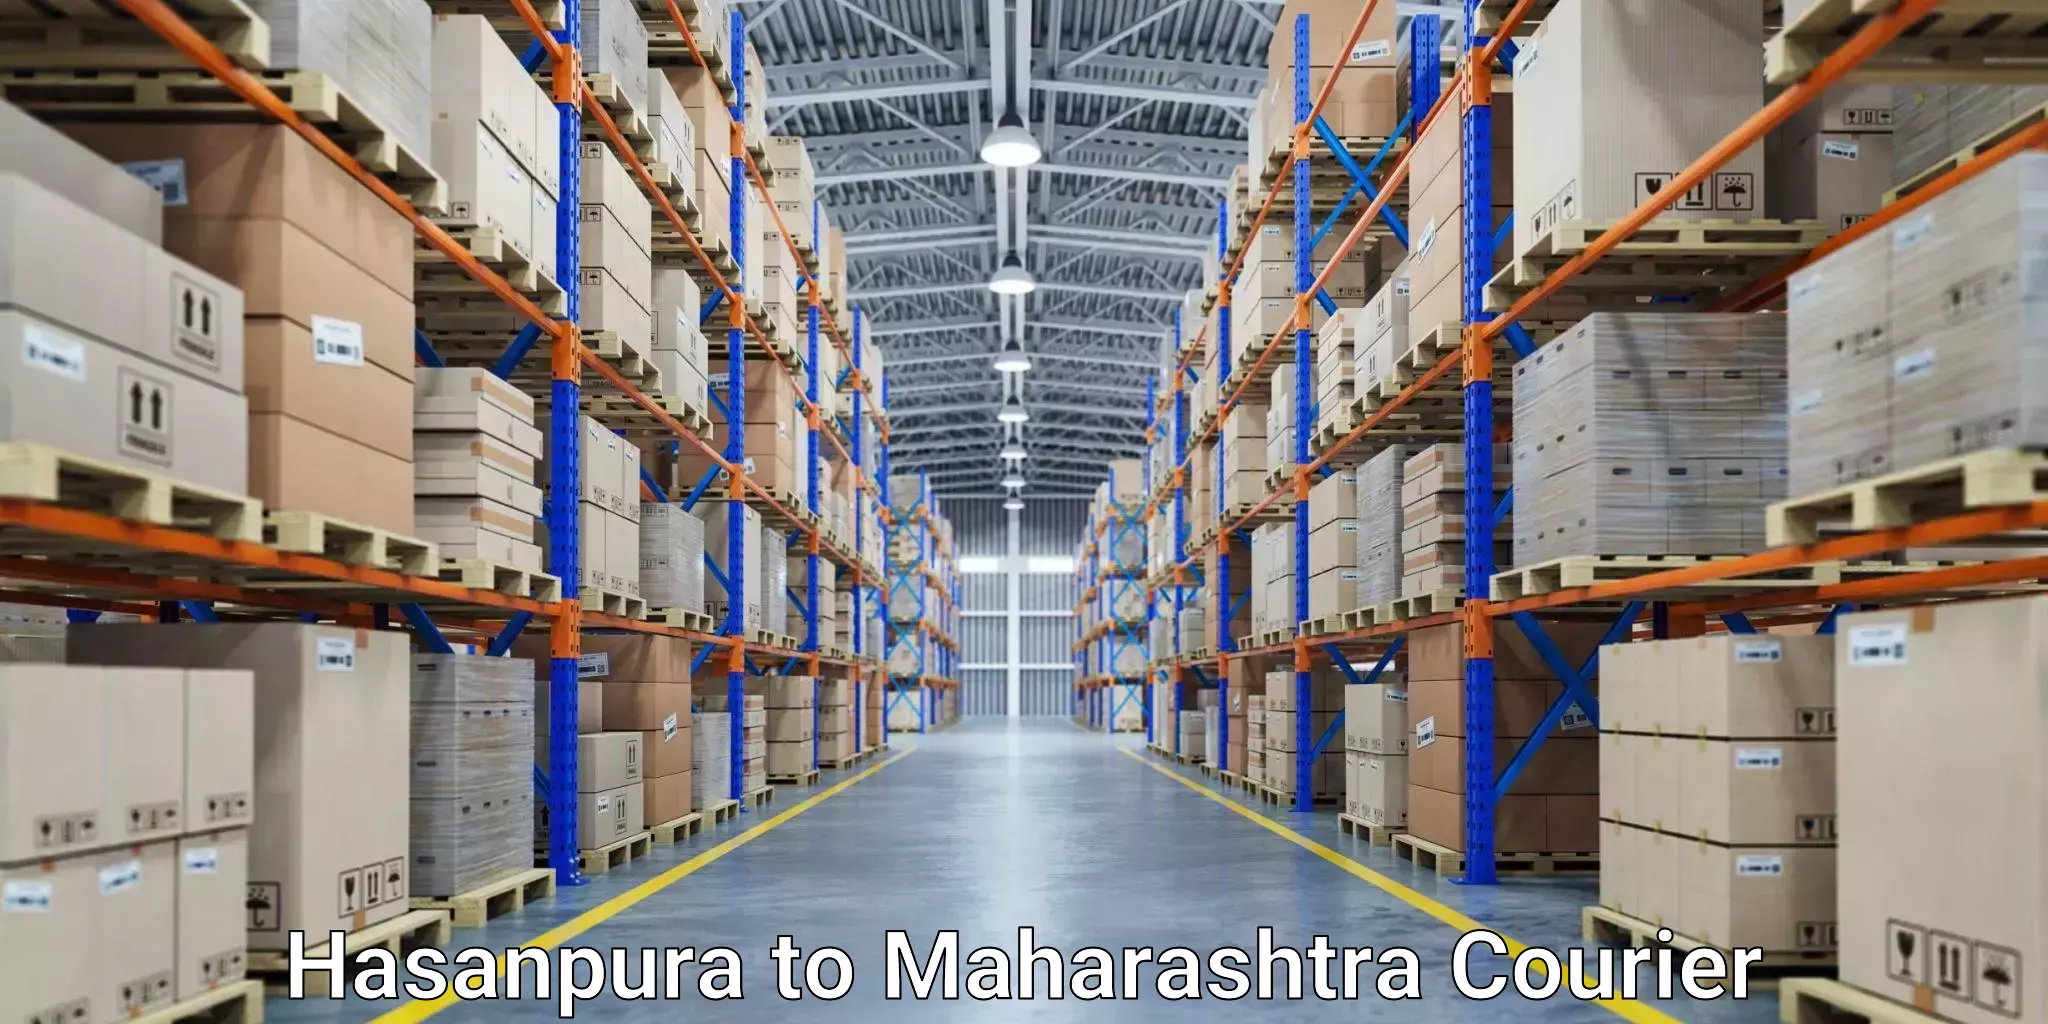 Courier service partnerships Hasanpura to Morshi